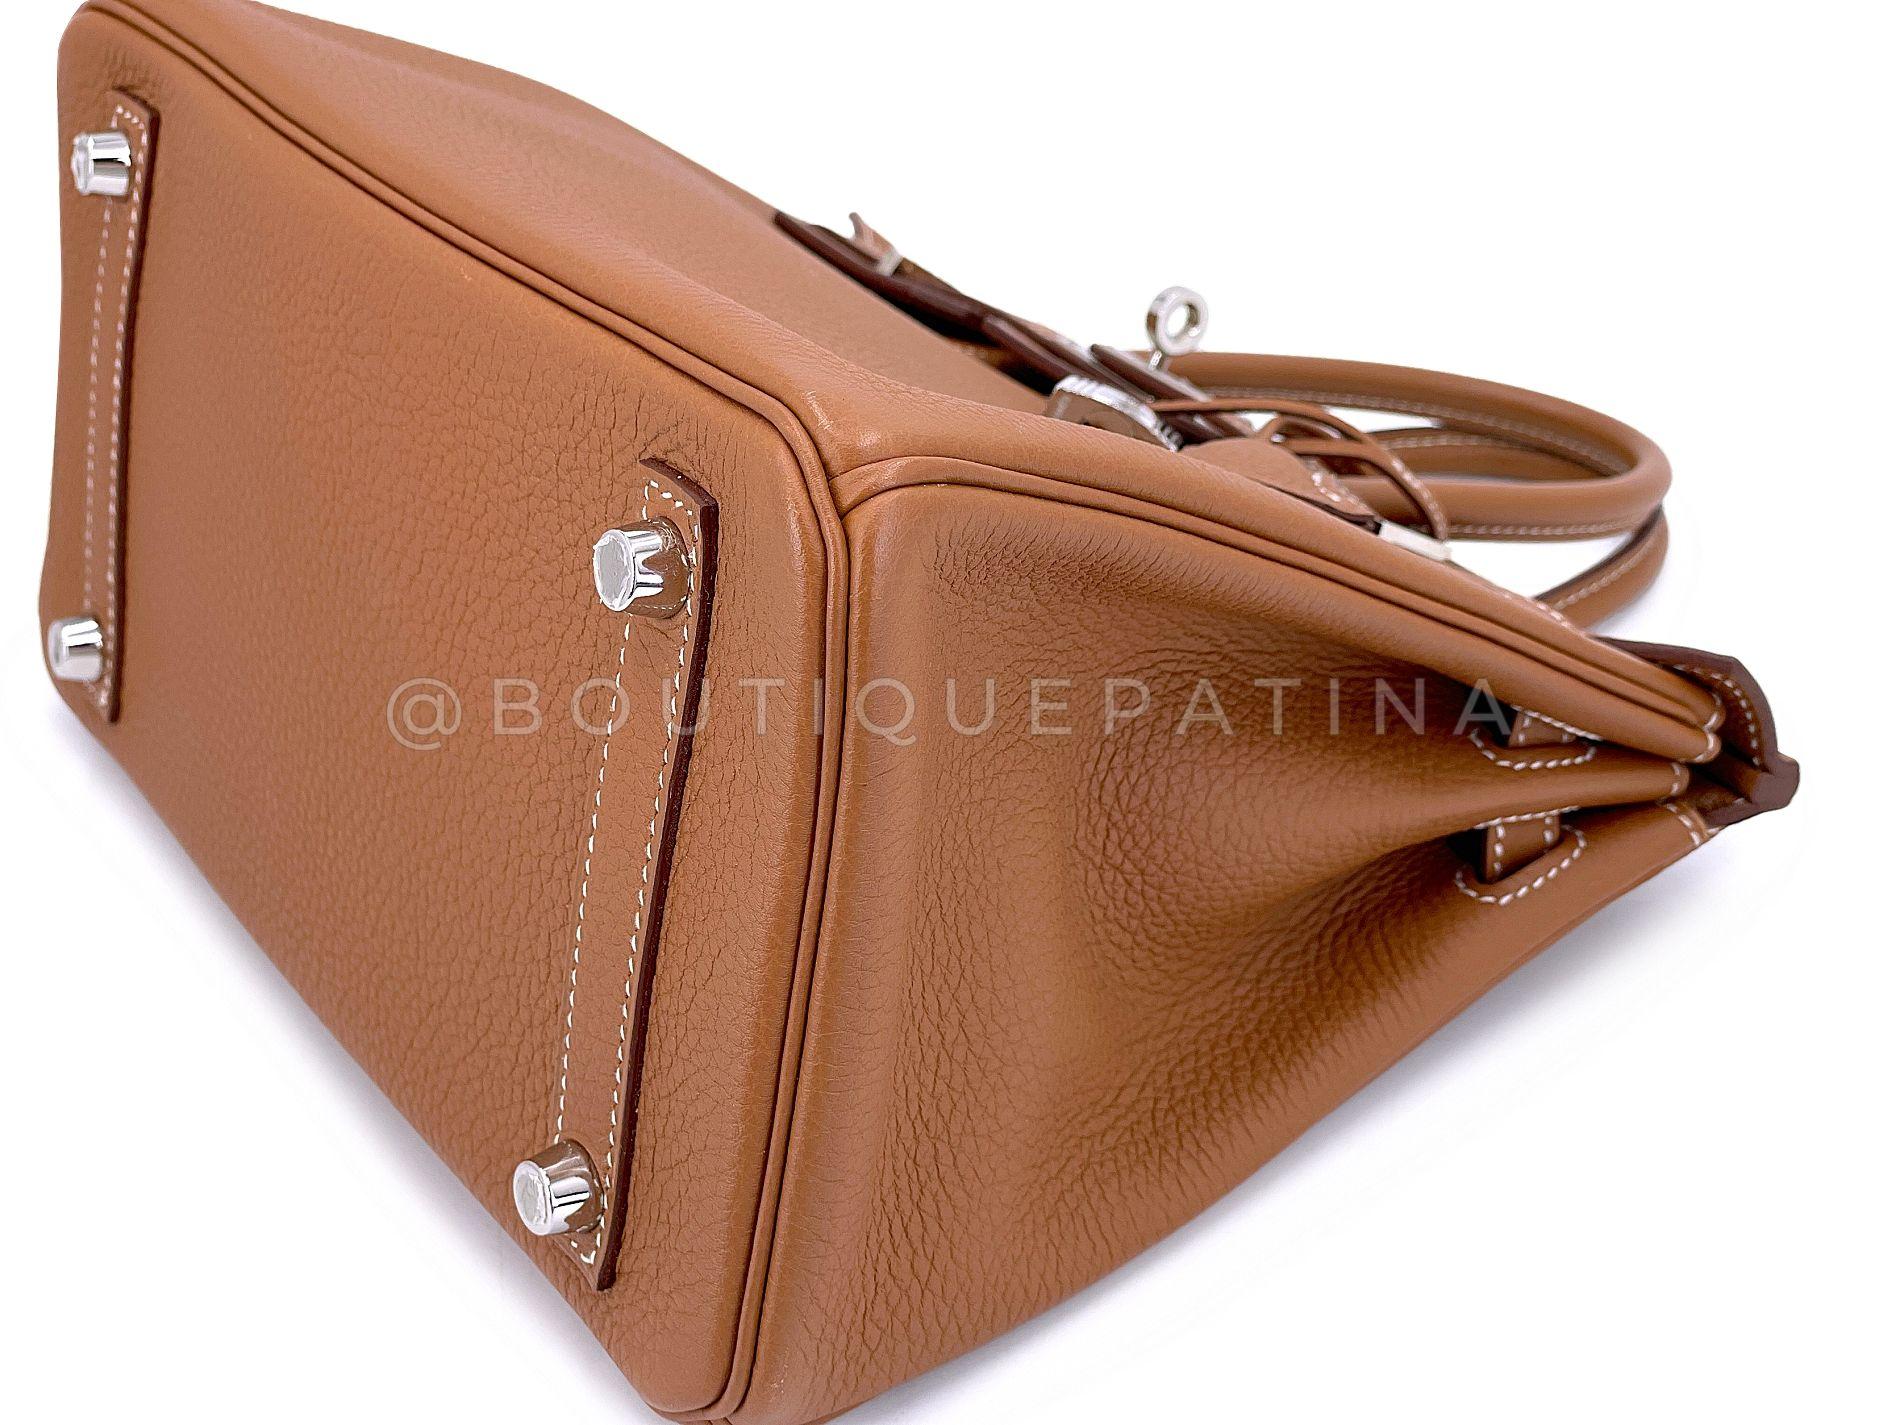 Hermès Gold Togo Birkin 25cm Tote Bag PHW 67913 For Sale 5